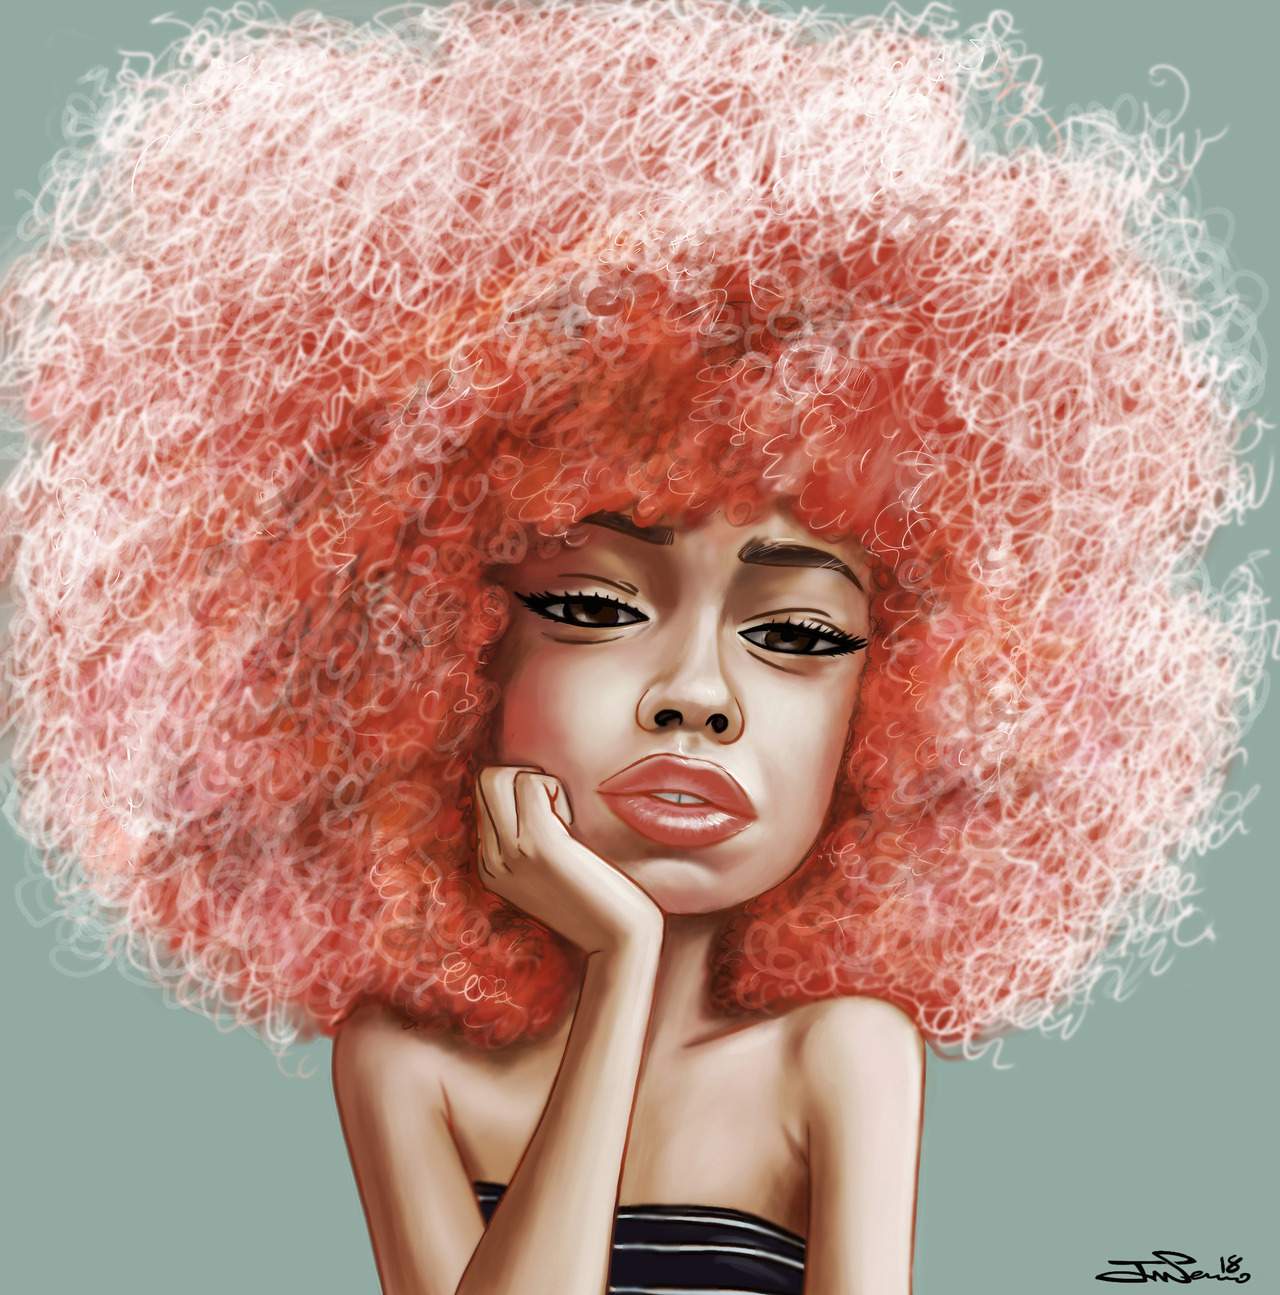 pink hair girl by joseleserrano https://joseleserrano.tumblr.com